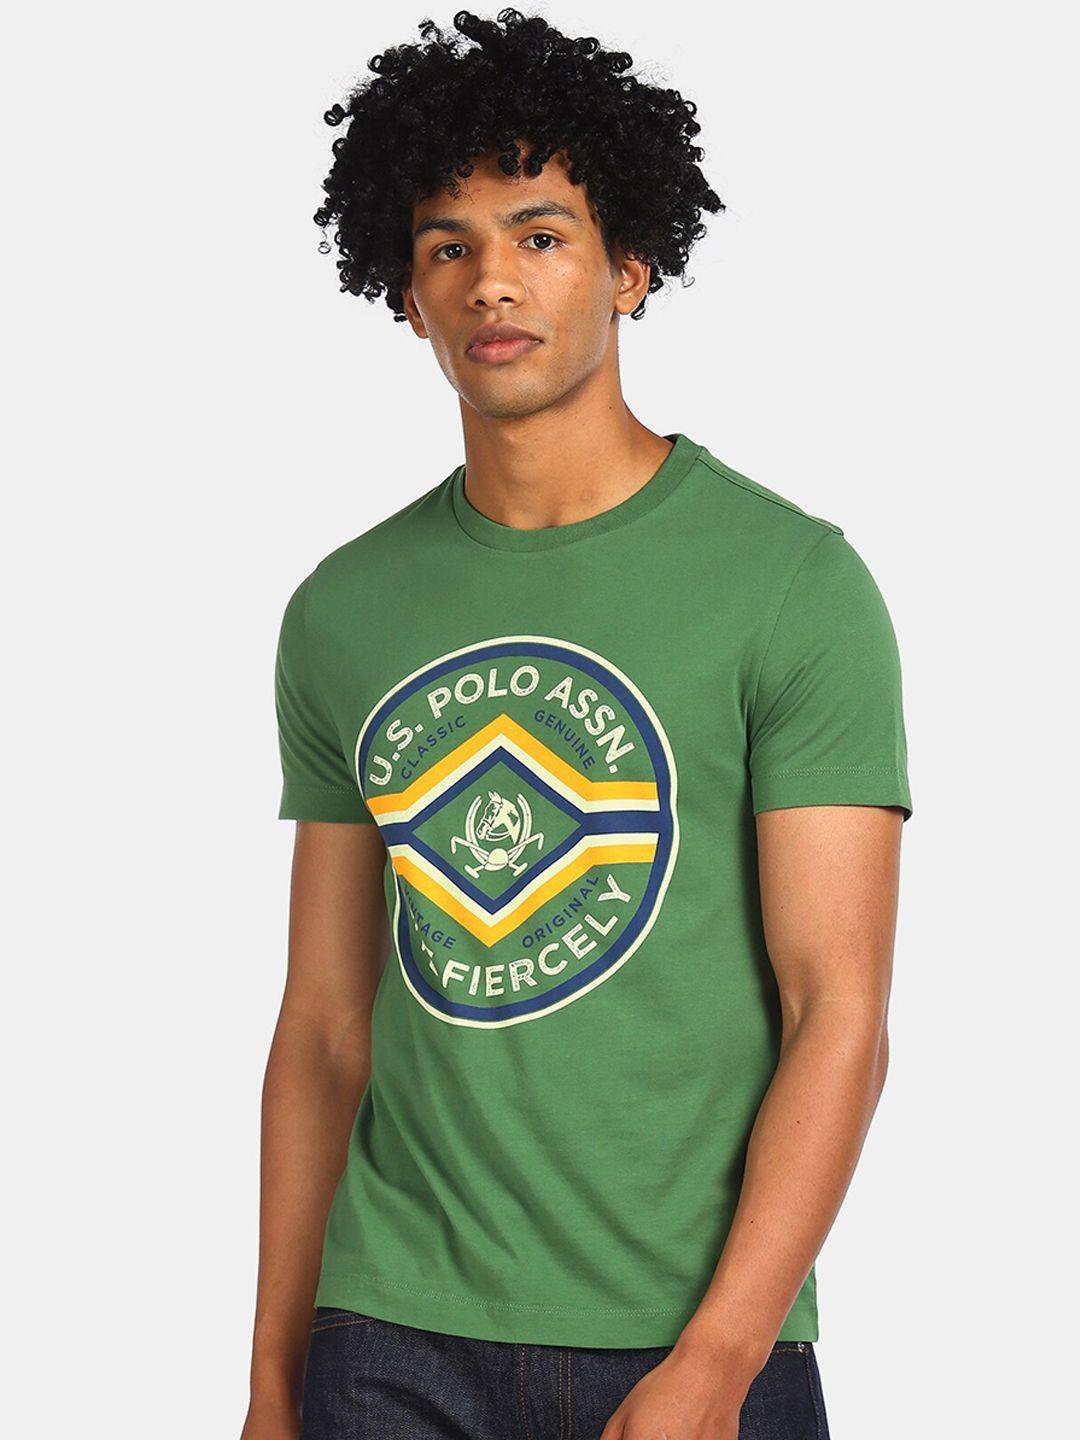 u.s. polo assn. denim co. men green & white printed round neck t-shirt